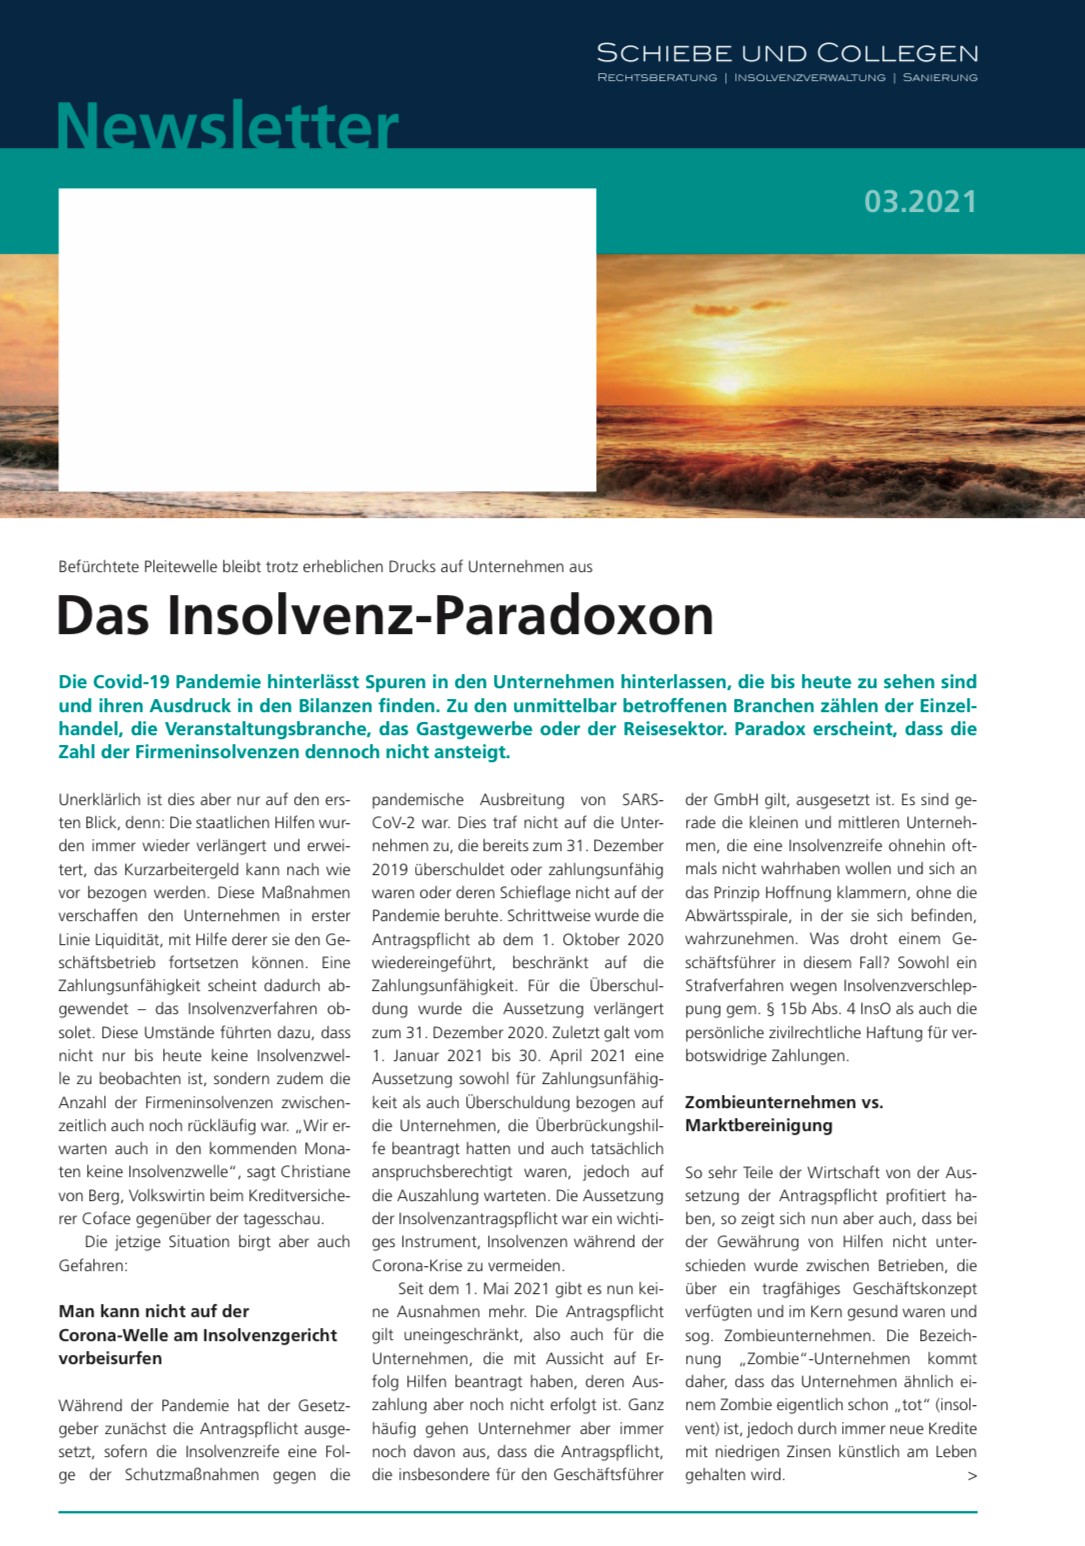 Das Insolvenz-Paradoxon